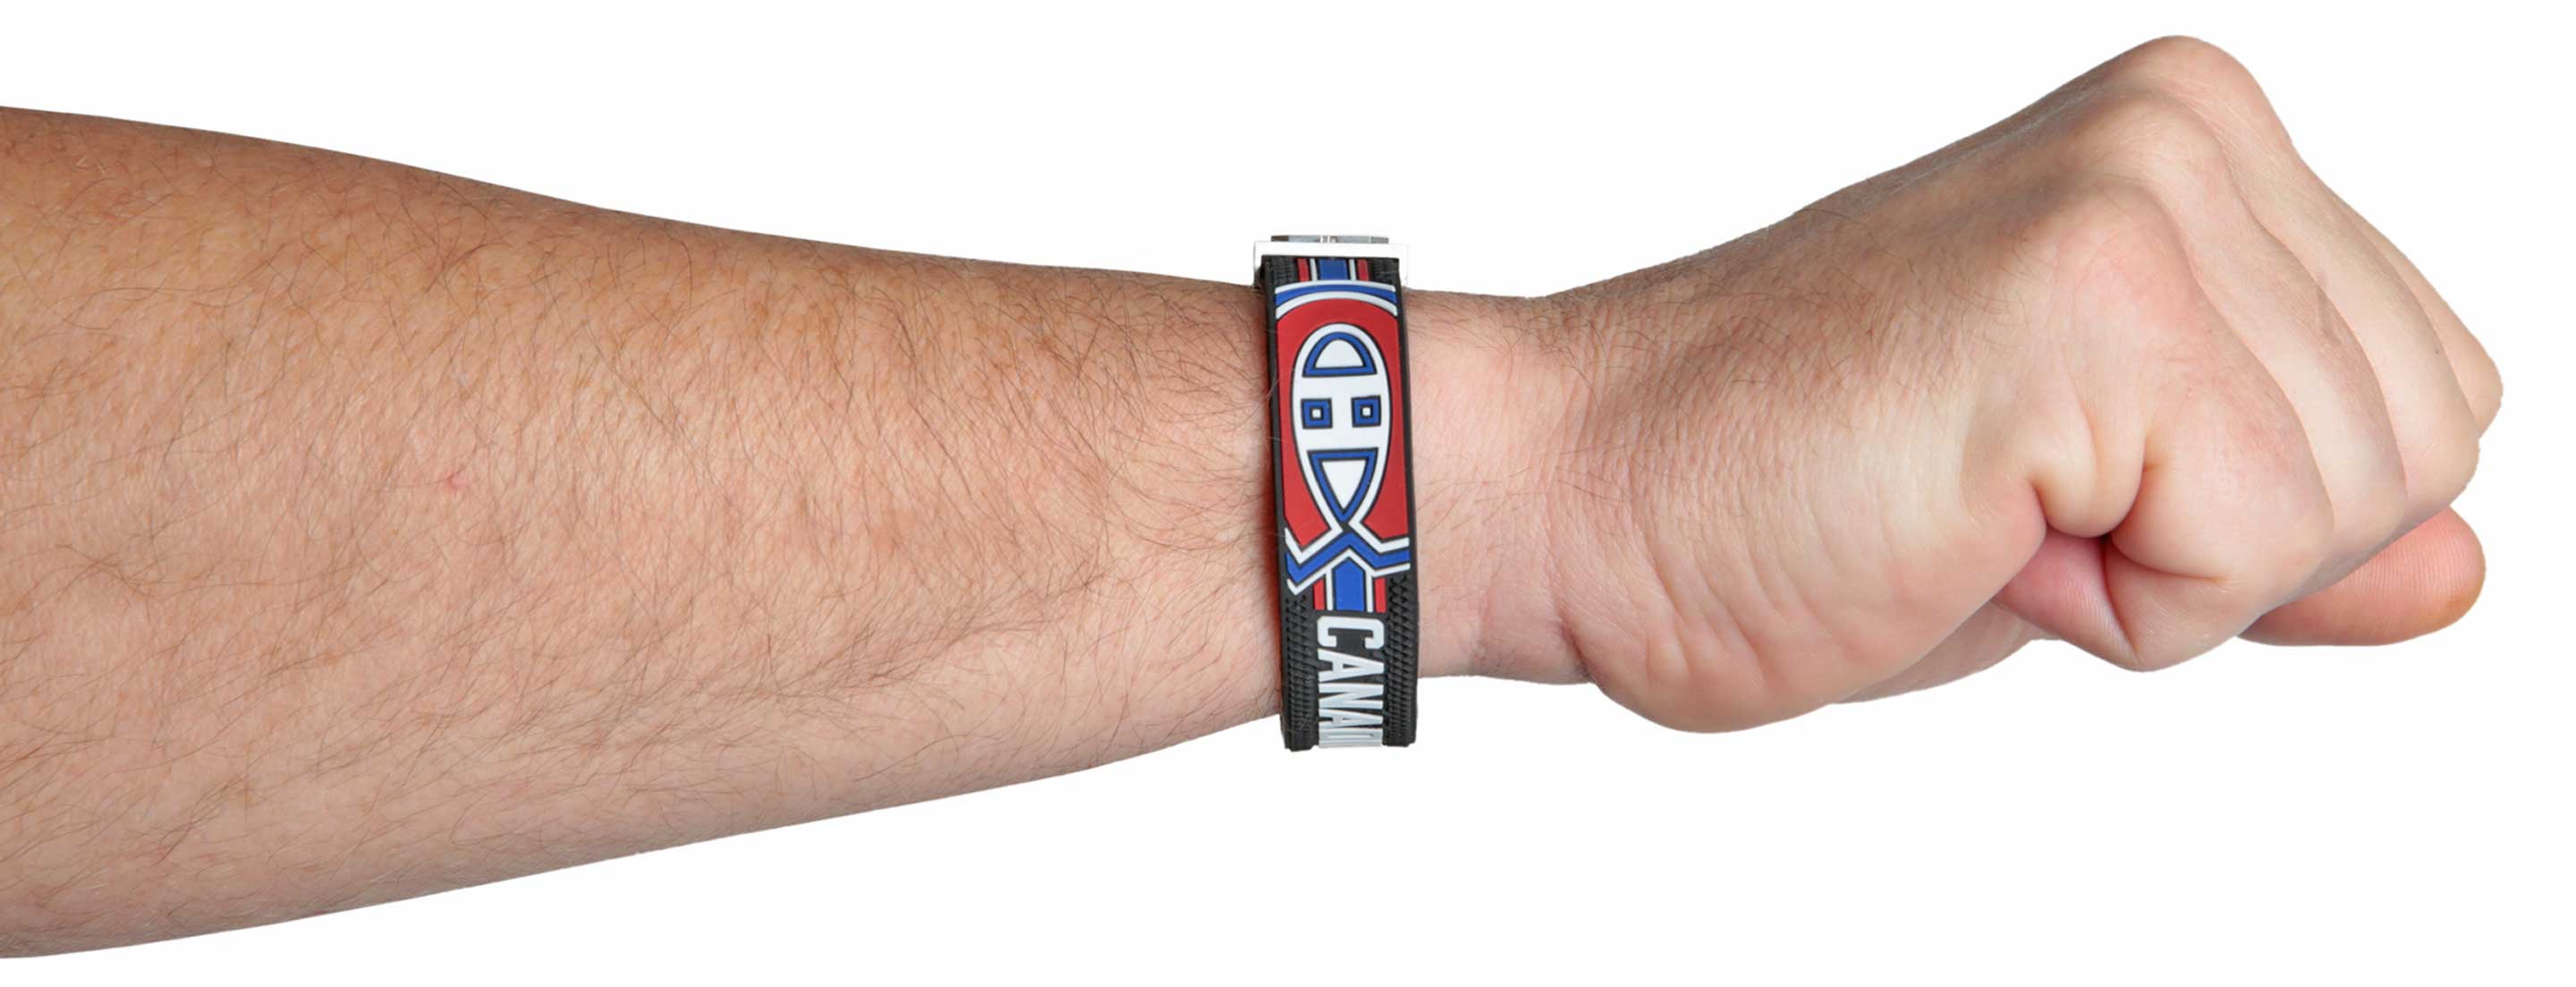 Montreal Canadiens Armband am Handgelenk